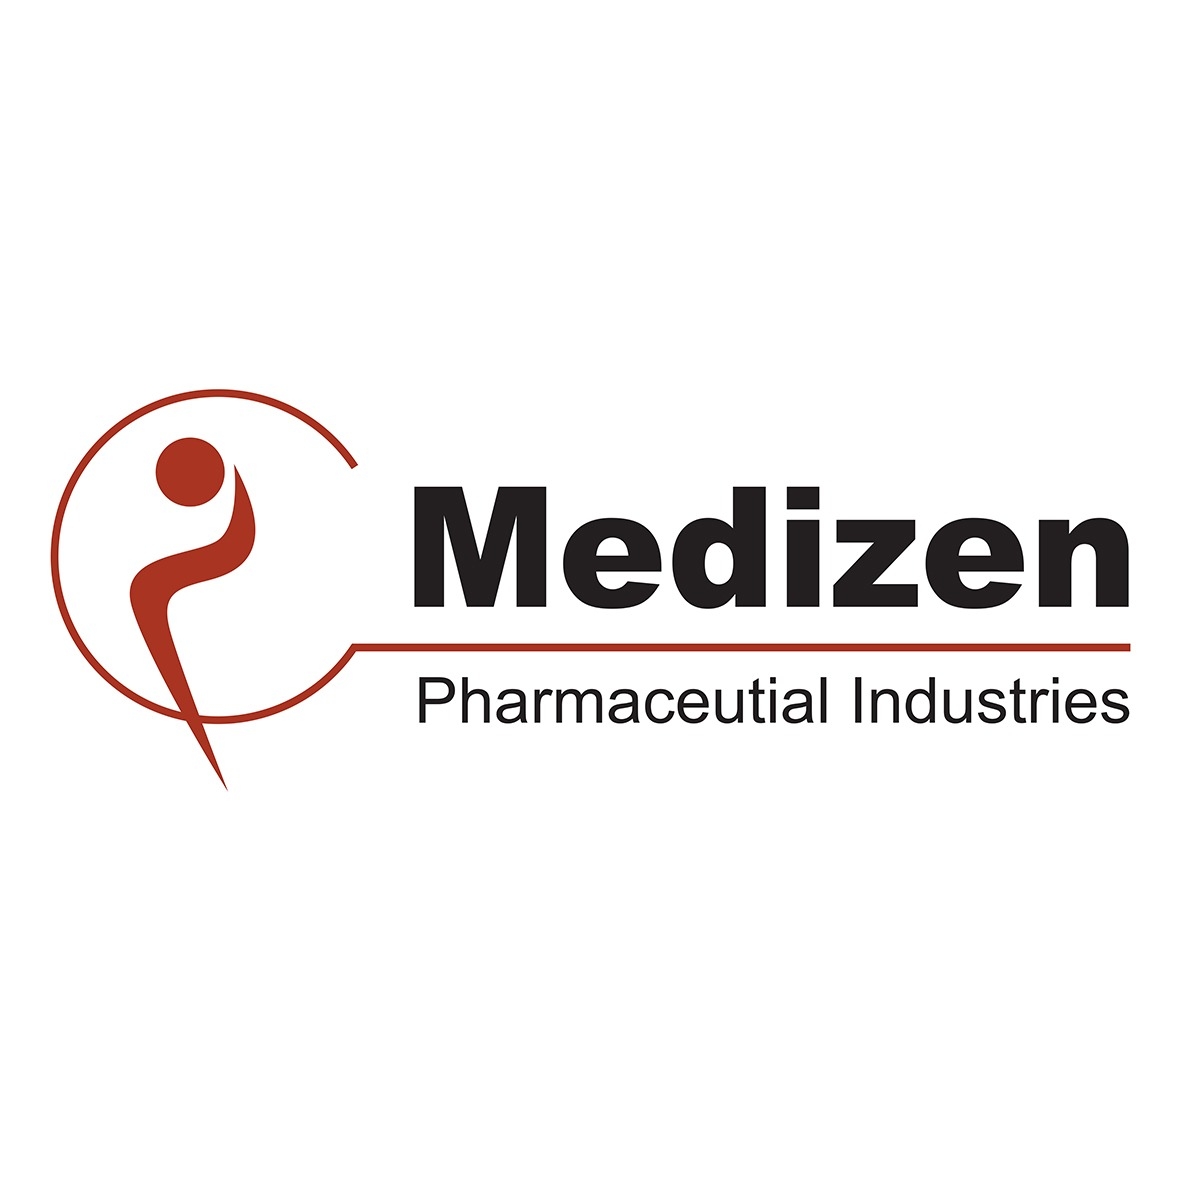 Medizen Pharmaceutical Industries